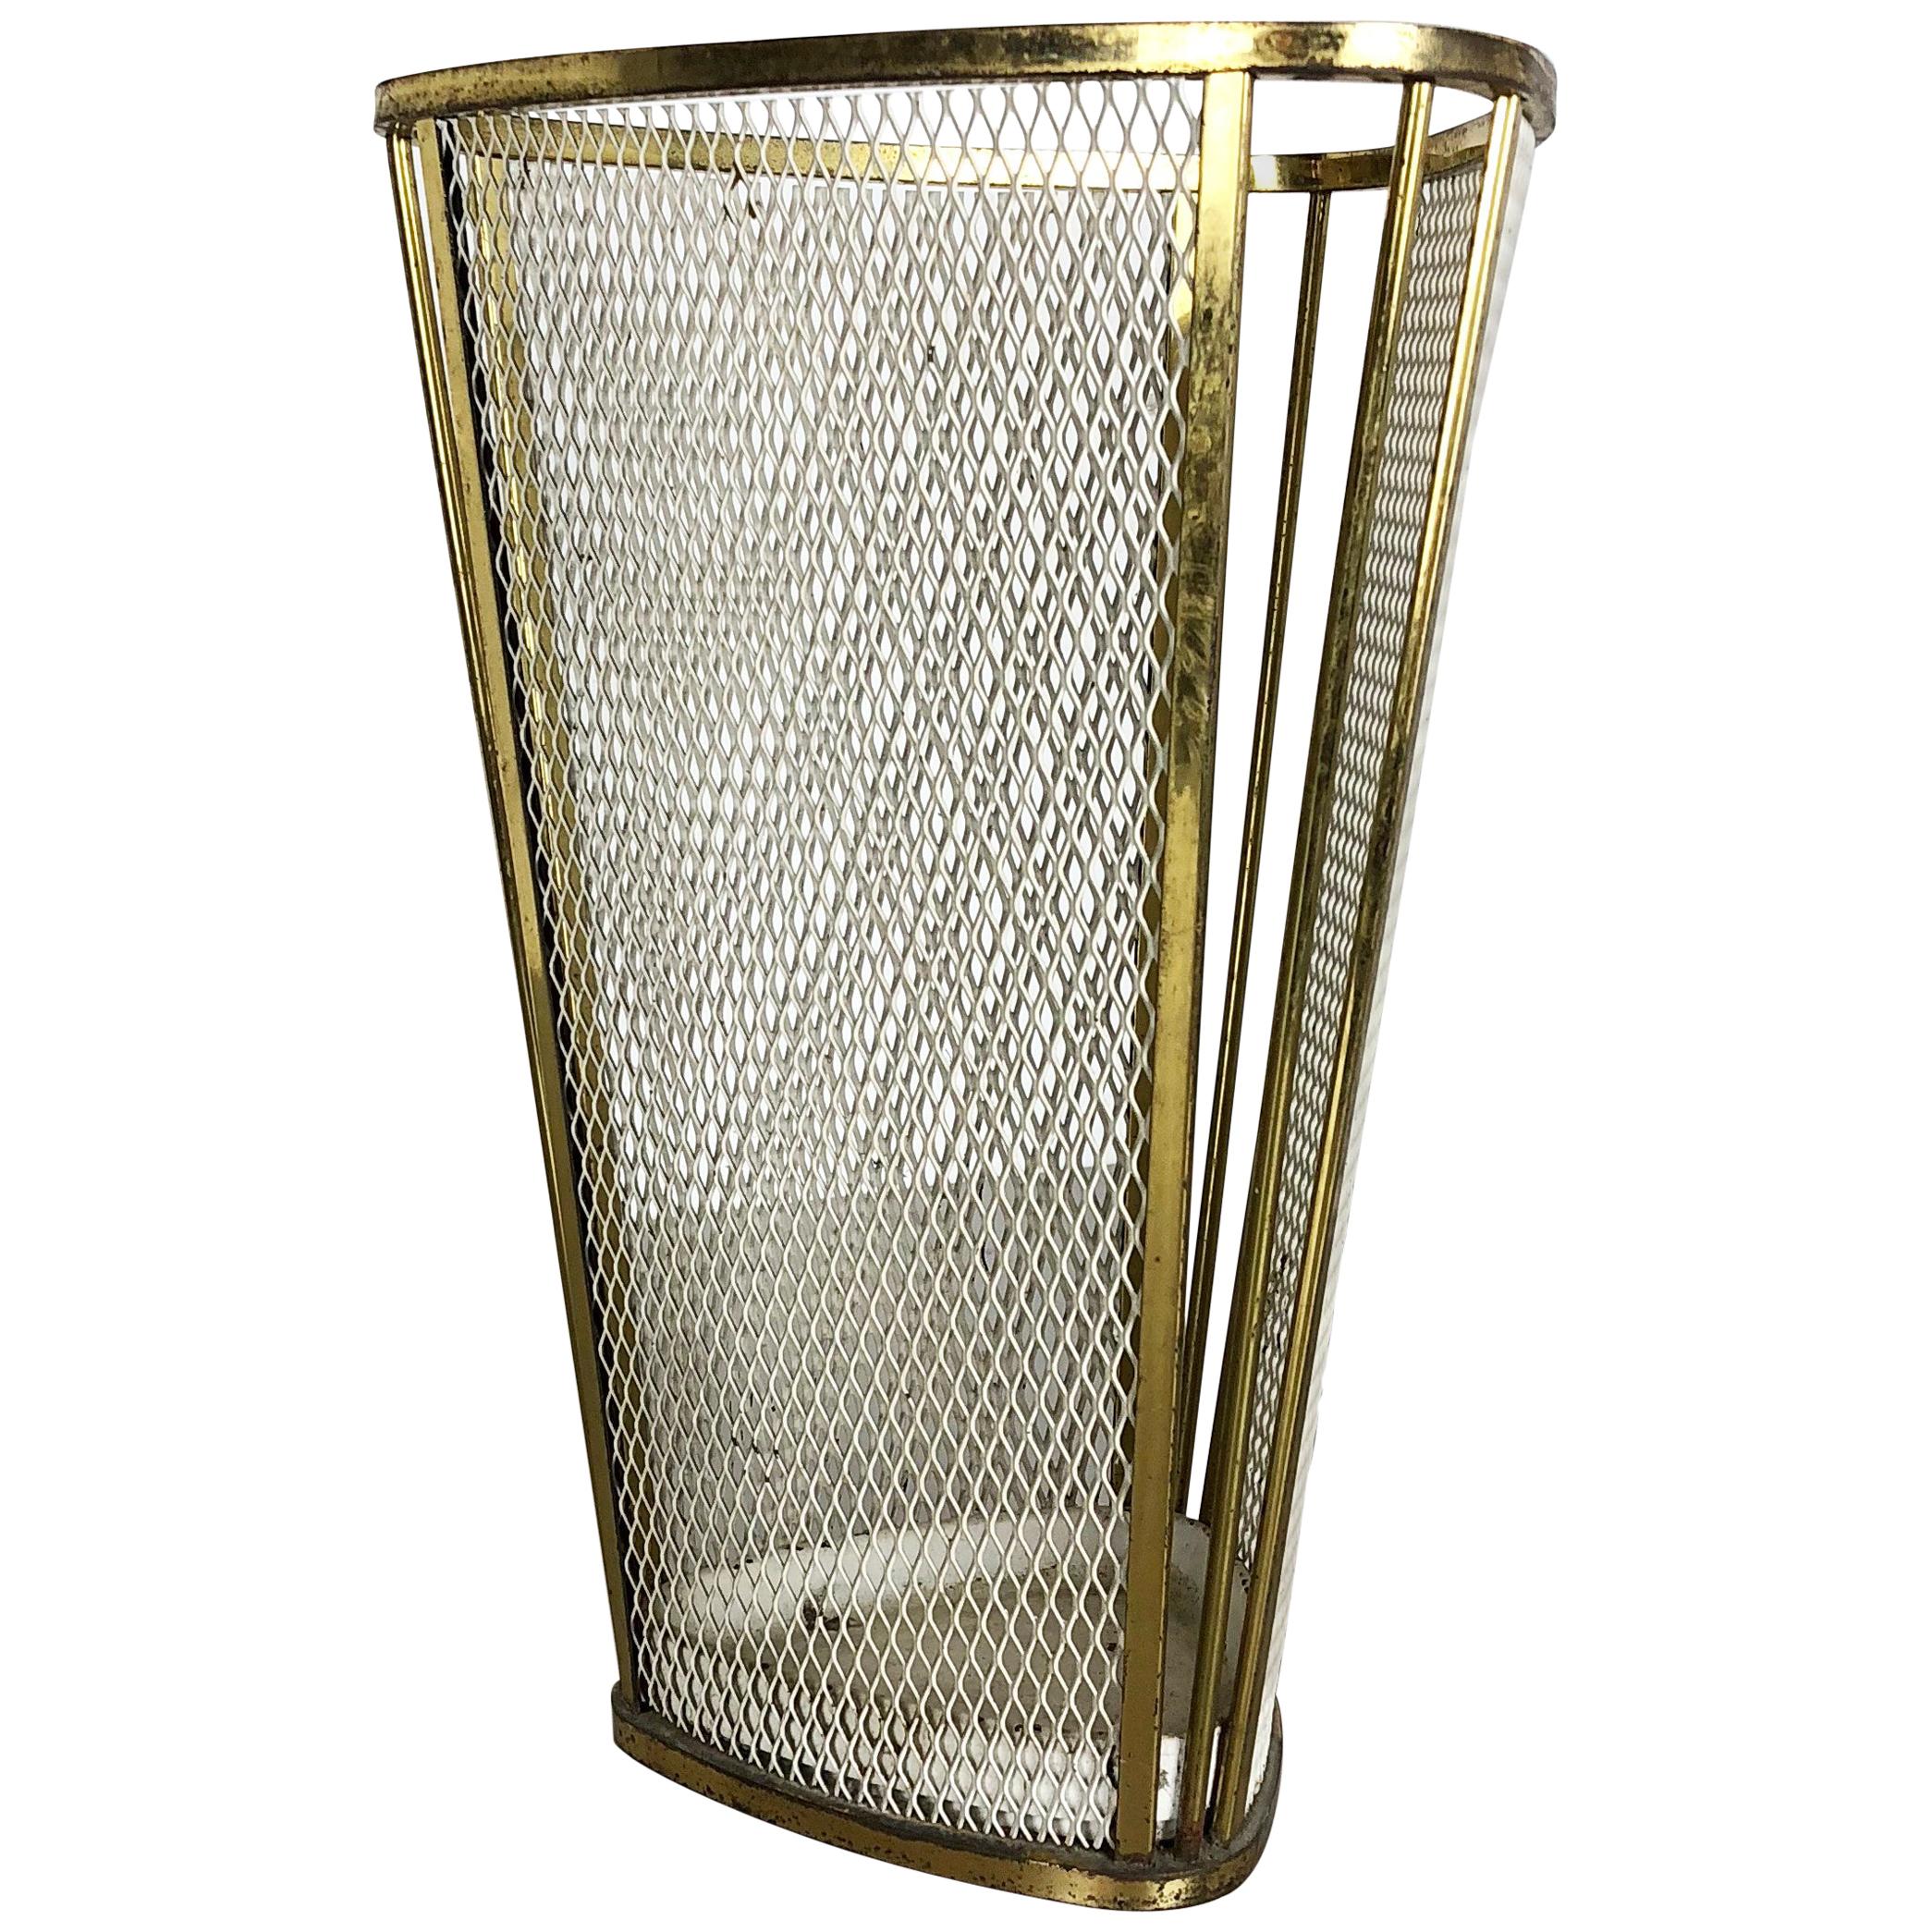 Original 1960s French Mategot Style Brass Umbrella Stand, Mid-Century Modern